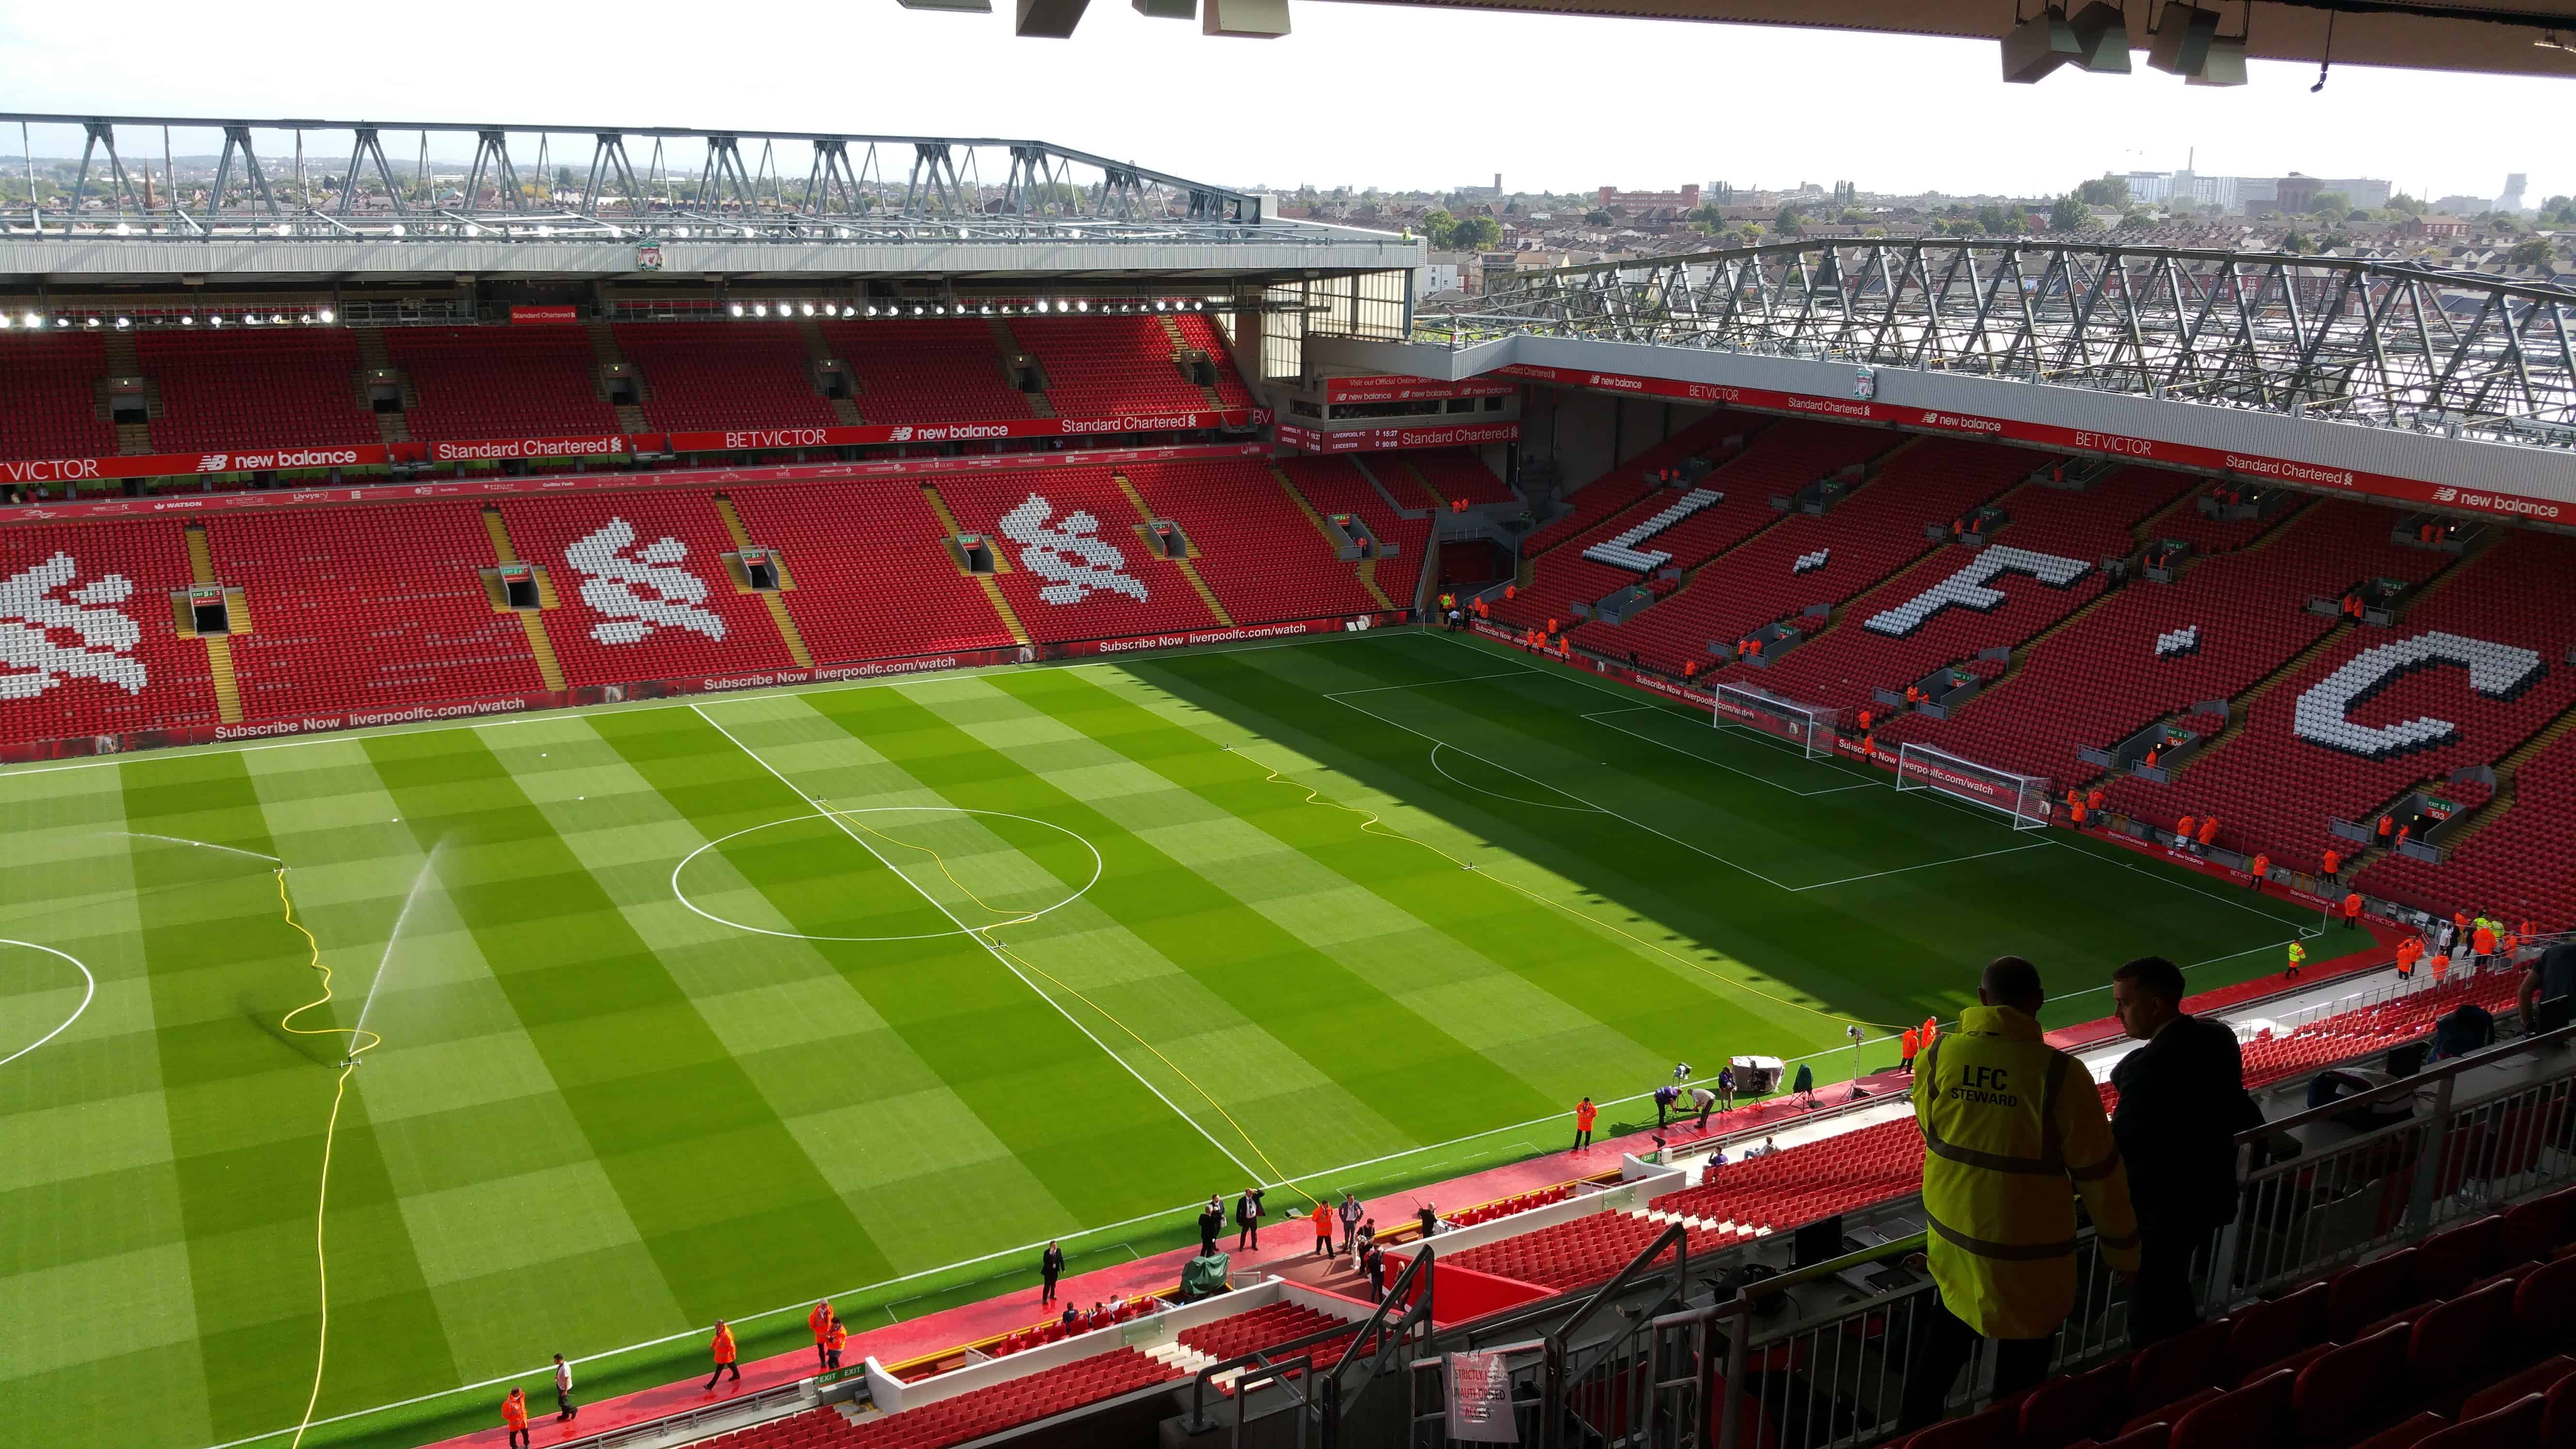 Å 33 Vanlige Fakta Om Liverpool Fc Anfield Stadium Liverpool Football Club Is A Professional